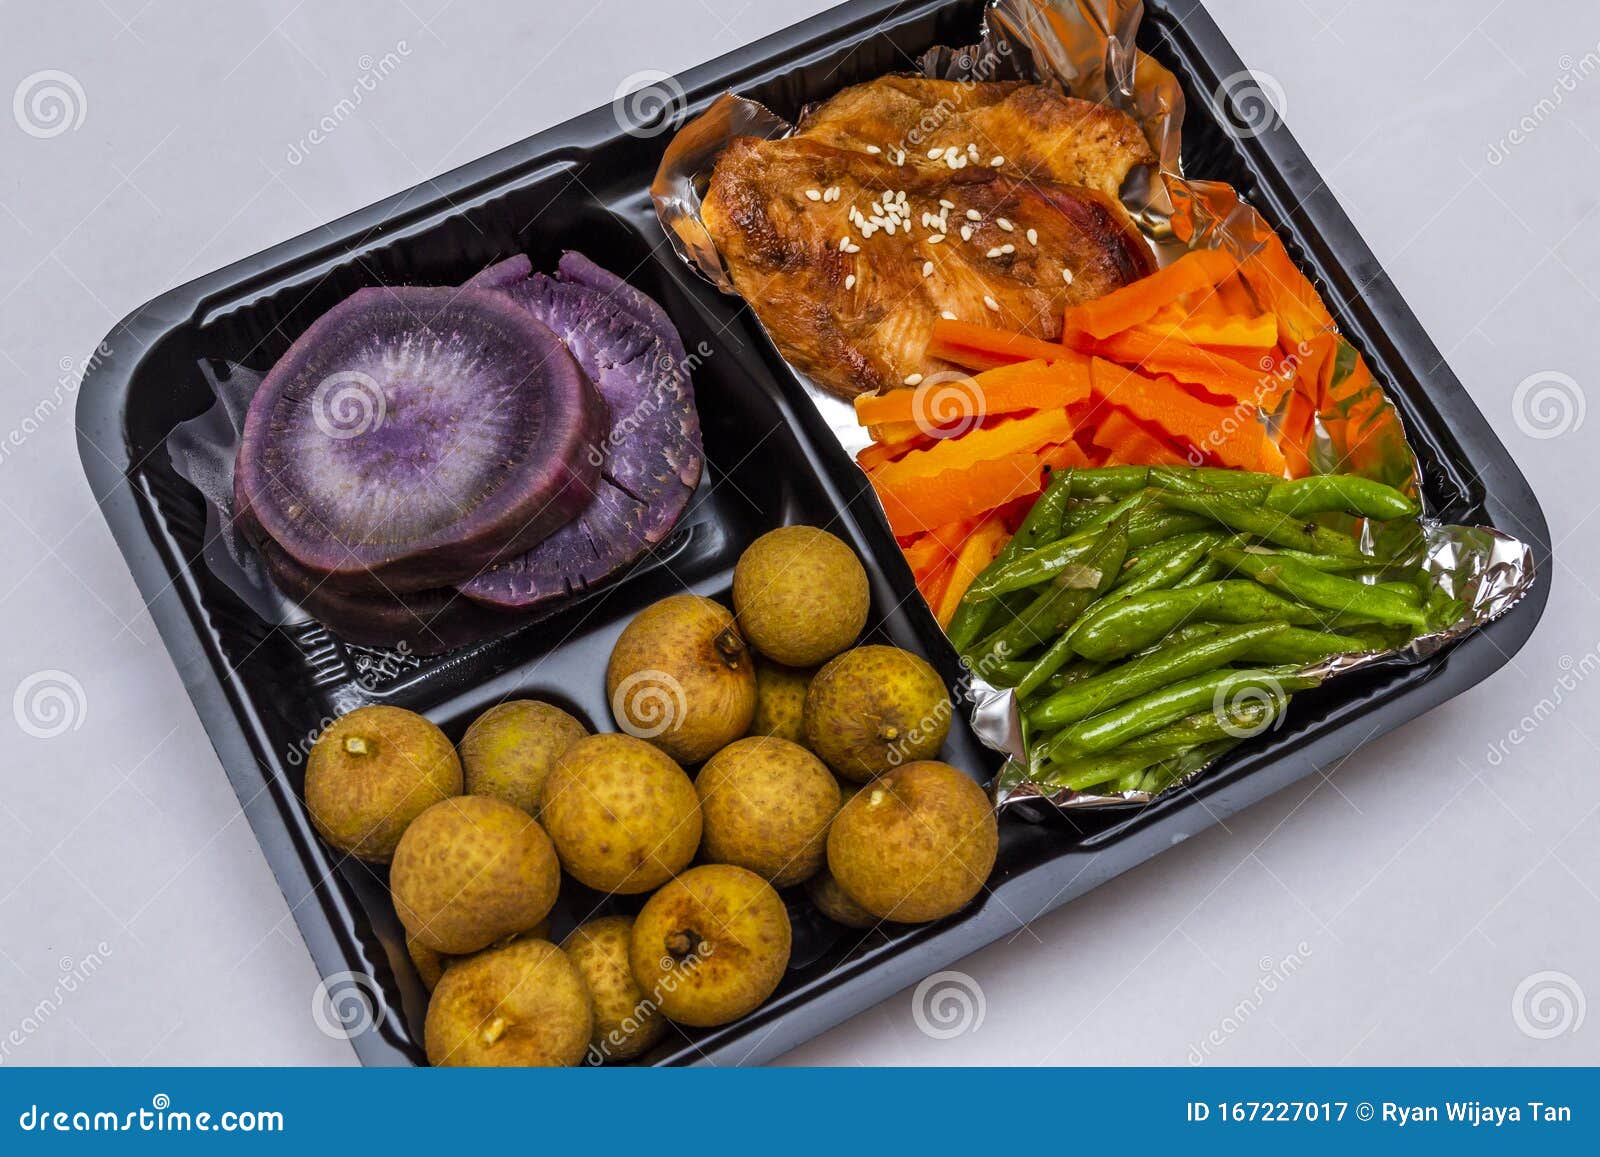 Healthy Diet Food Bento Box Asian Food Stock Image Image Of Gourmet Plan 167227017